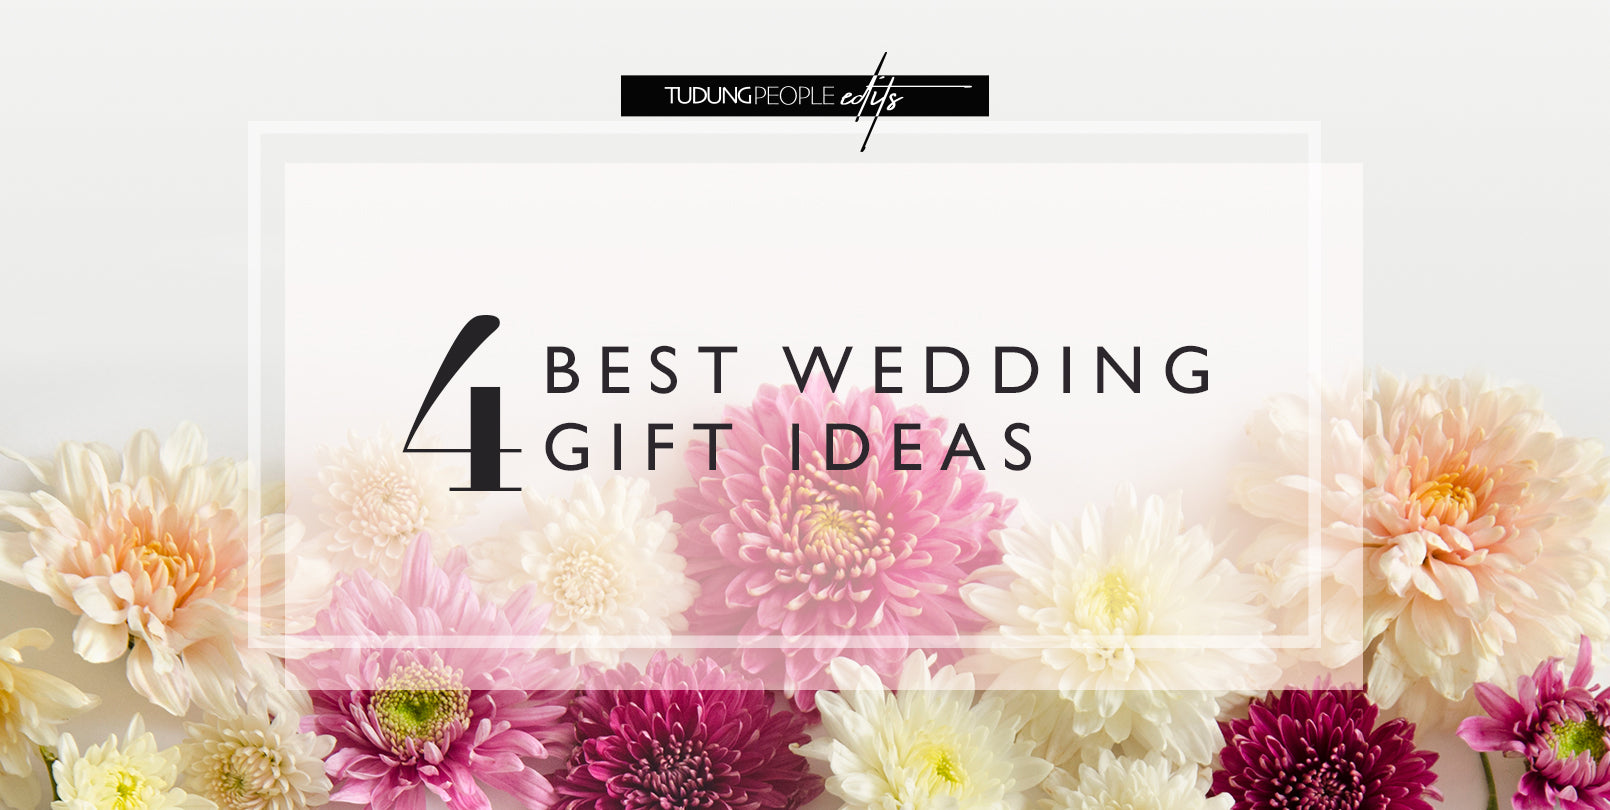 4-BEST-WEDDING-GIFT-IDEAS-1610-x-810-(web)